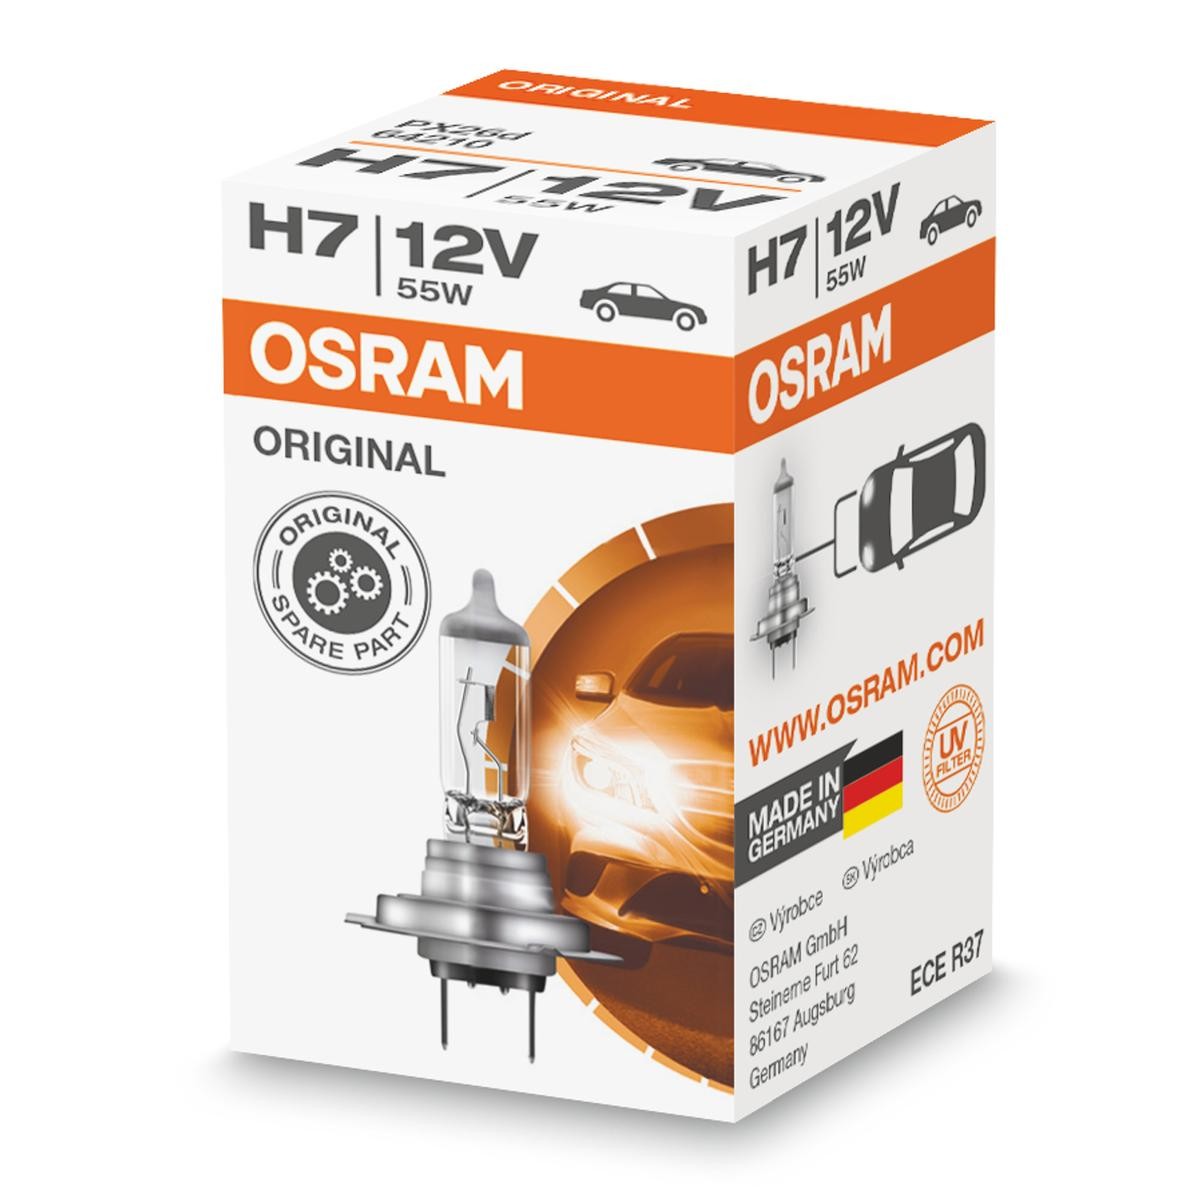 OSRAM 64210L original SSANGYONG Headlight bulb H7 12V 55W 3200K Halogen